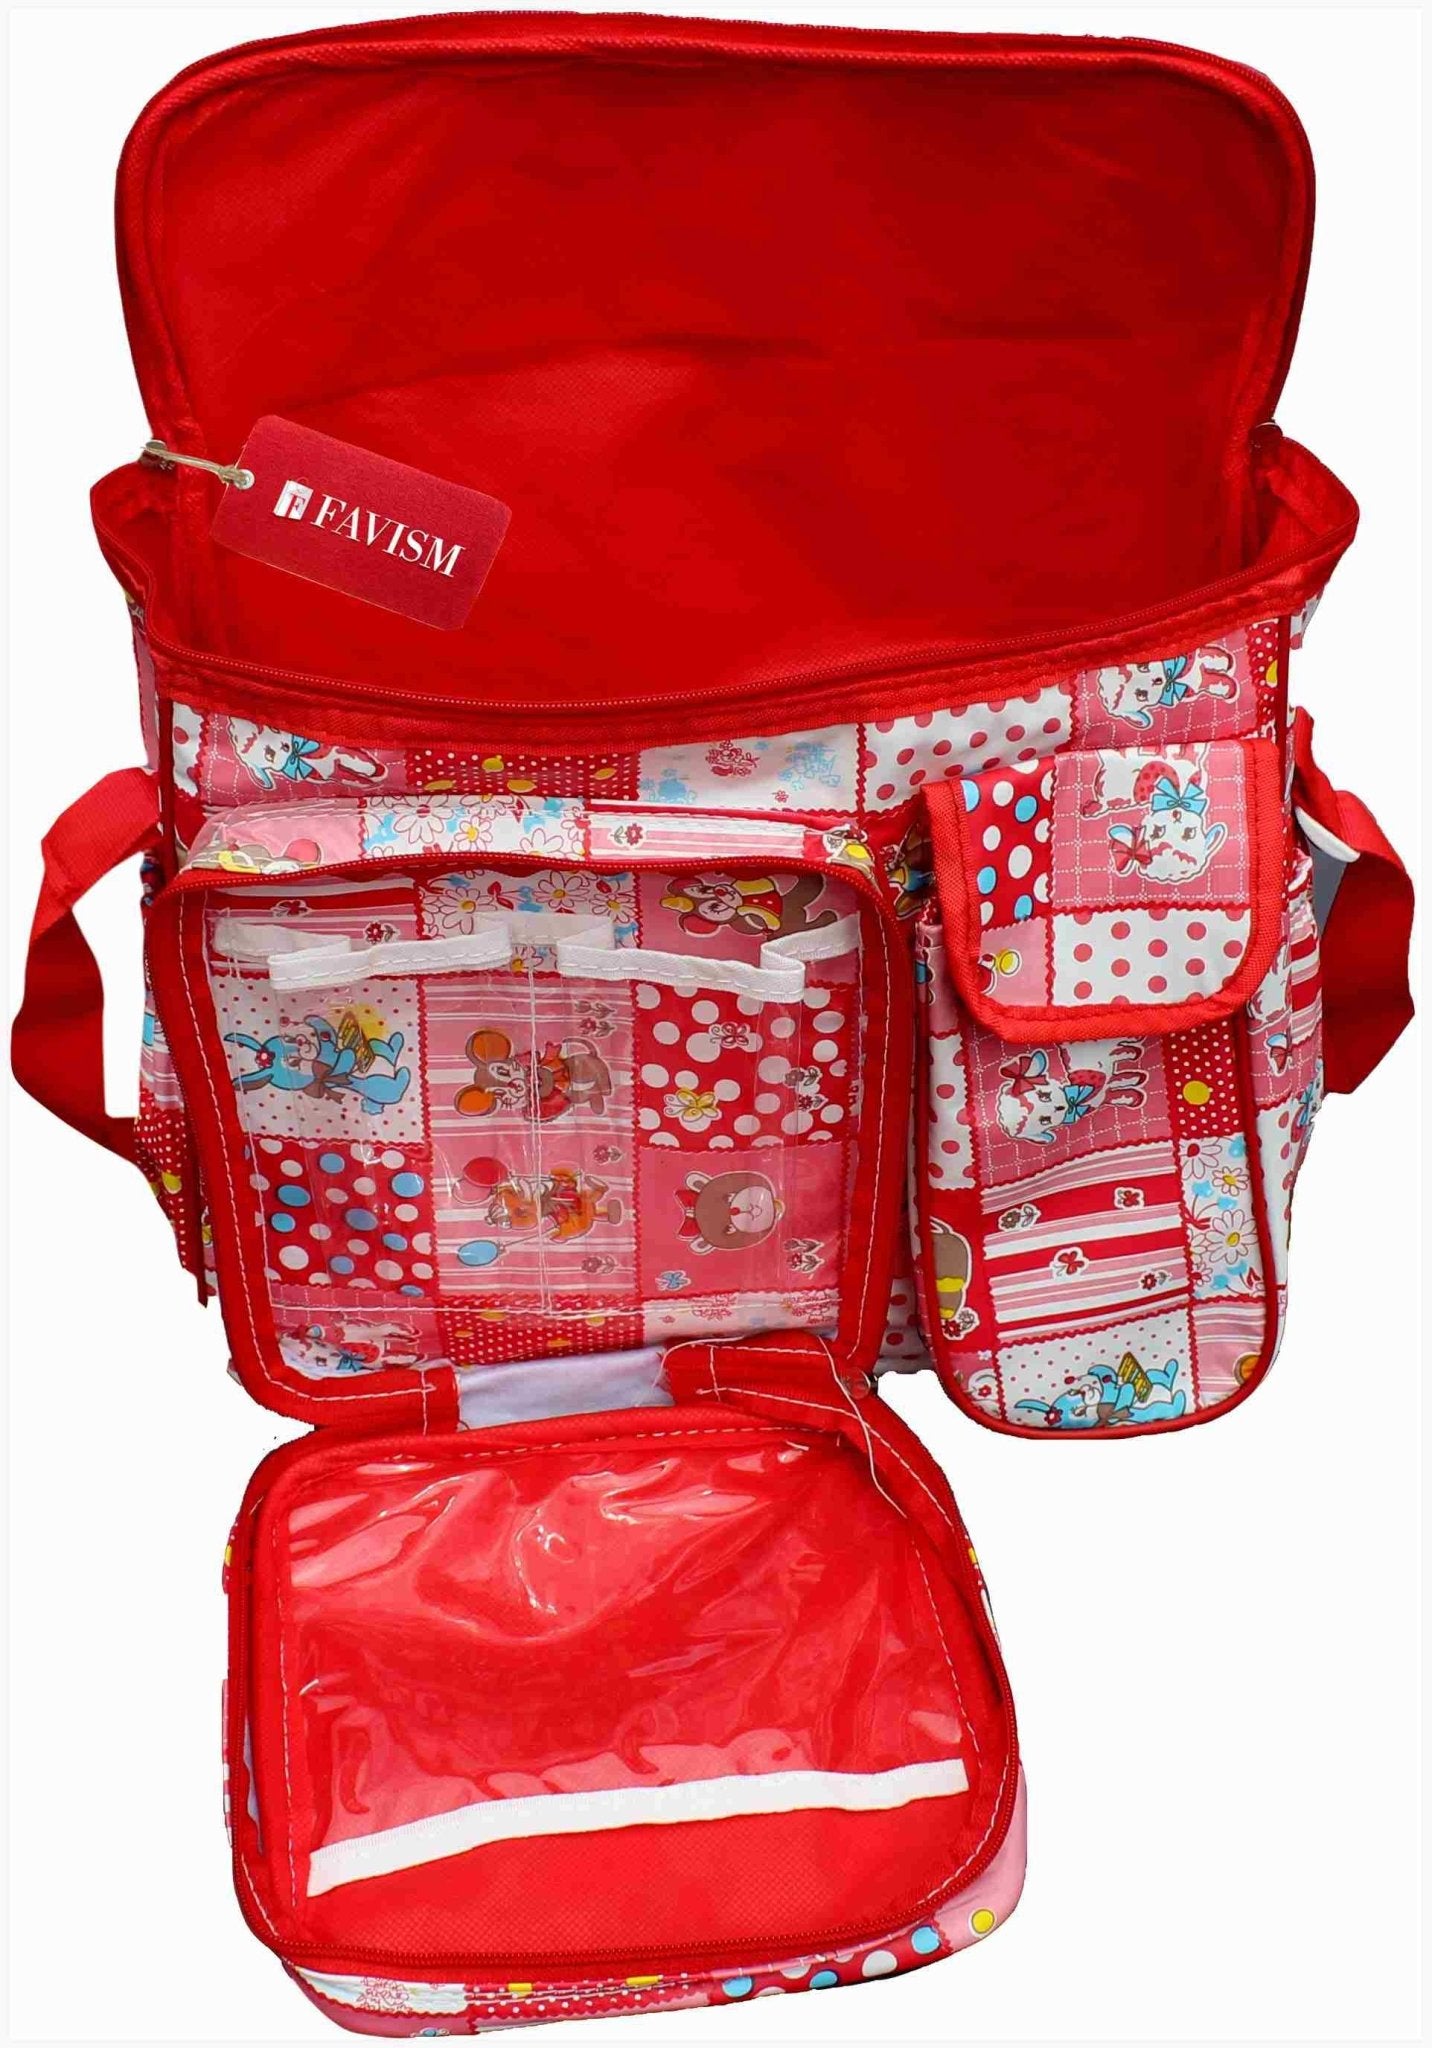 Baby diaper bag for mother | baby accessories bag | multipurpose bag - FAVISM